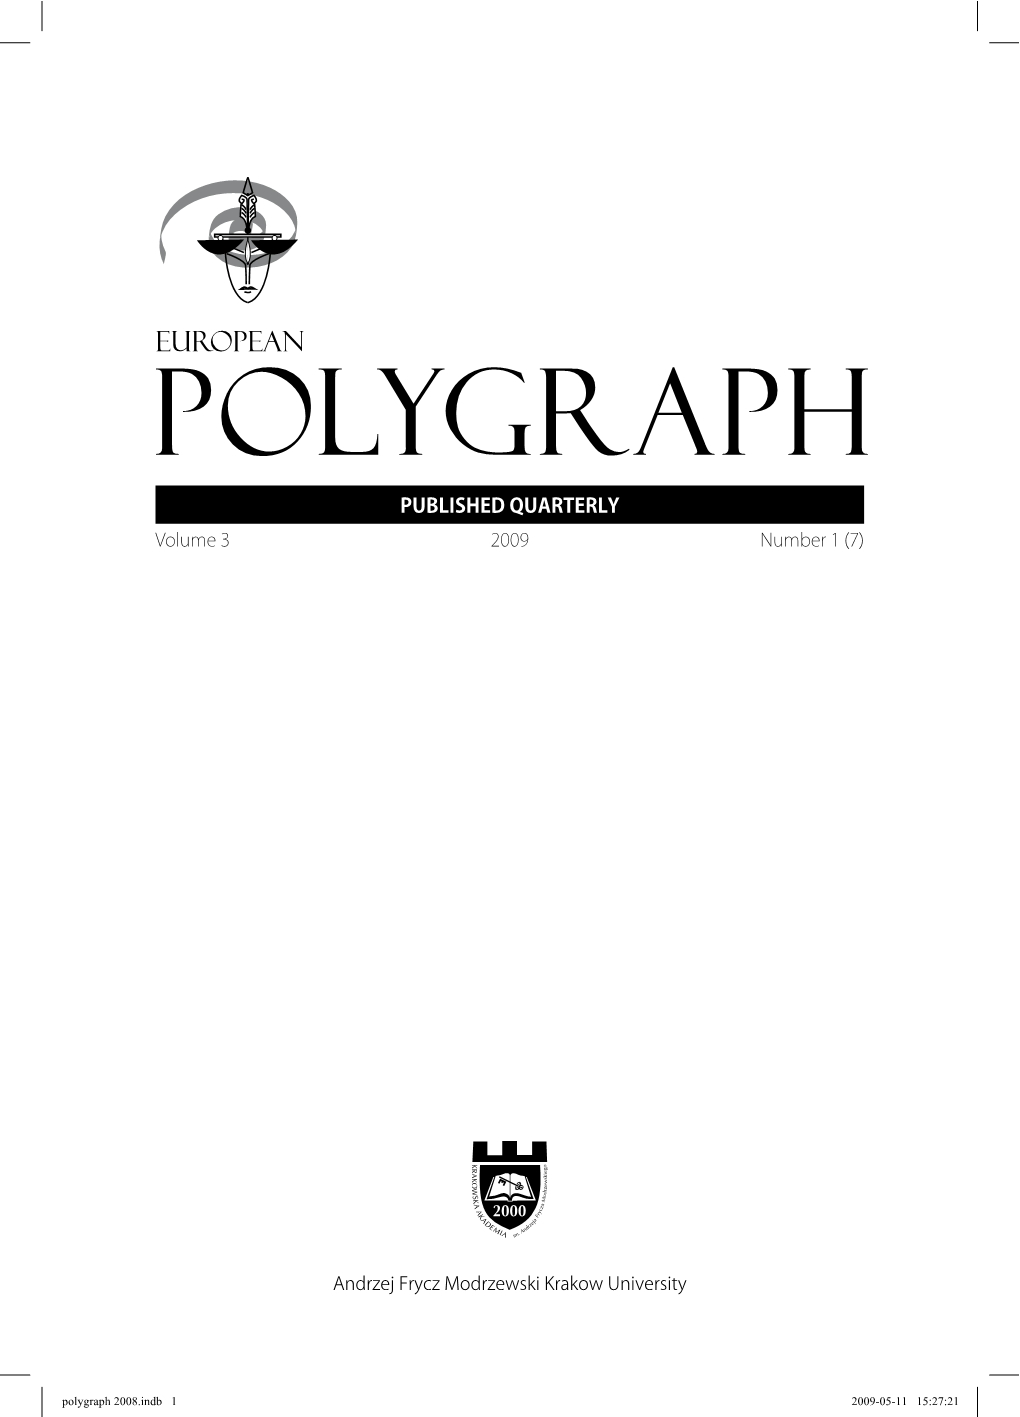 Antagonistic polygraph examination by Ryszard Jaworski